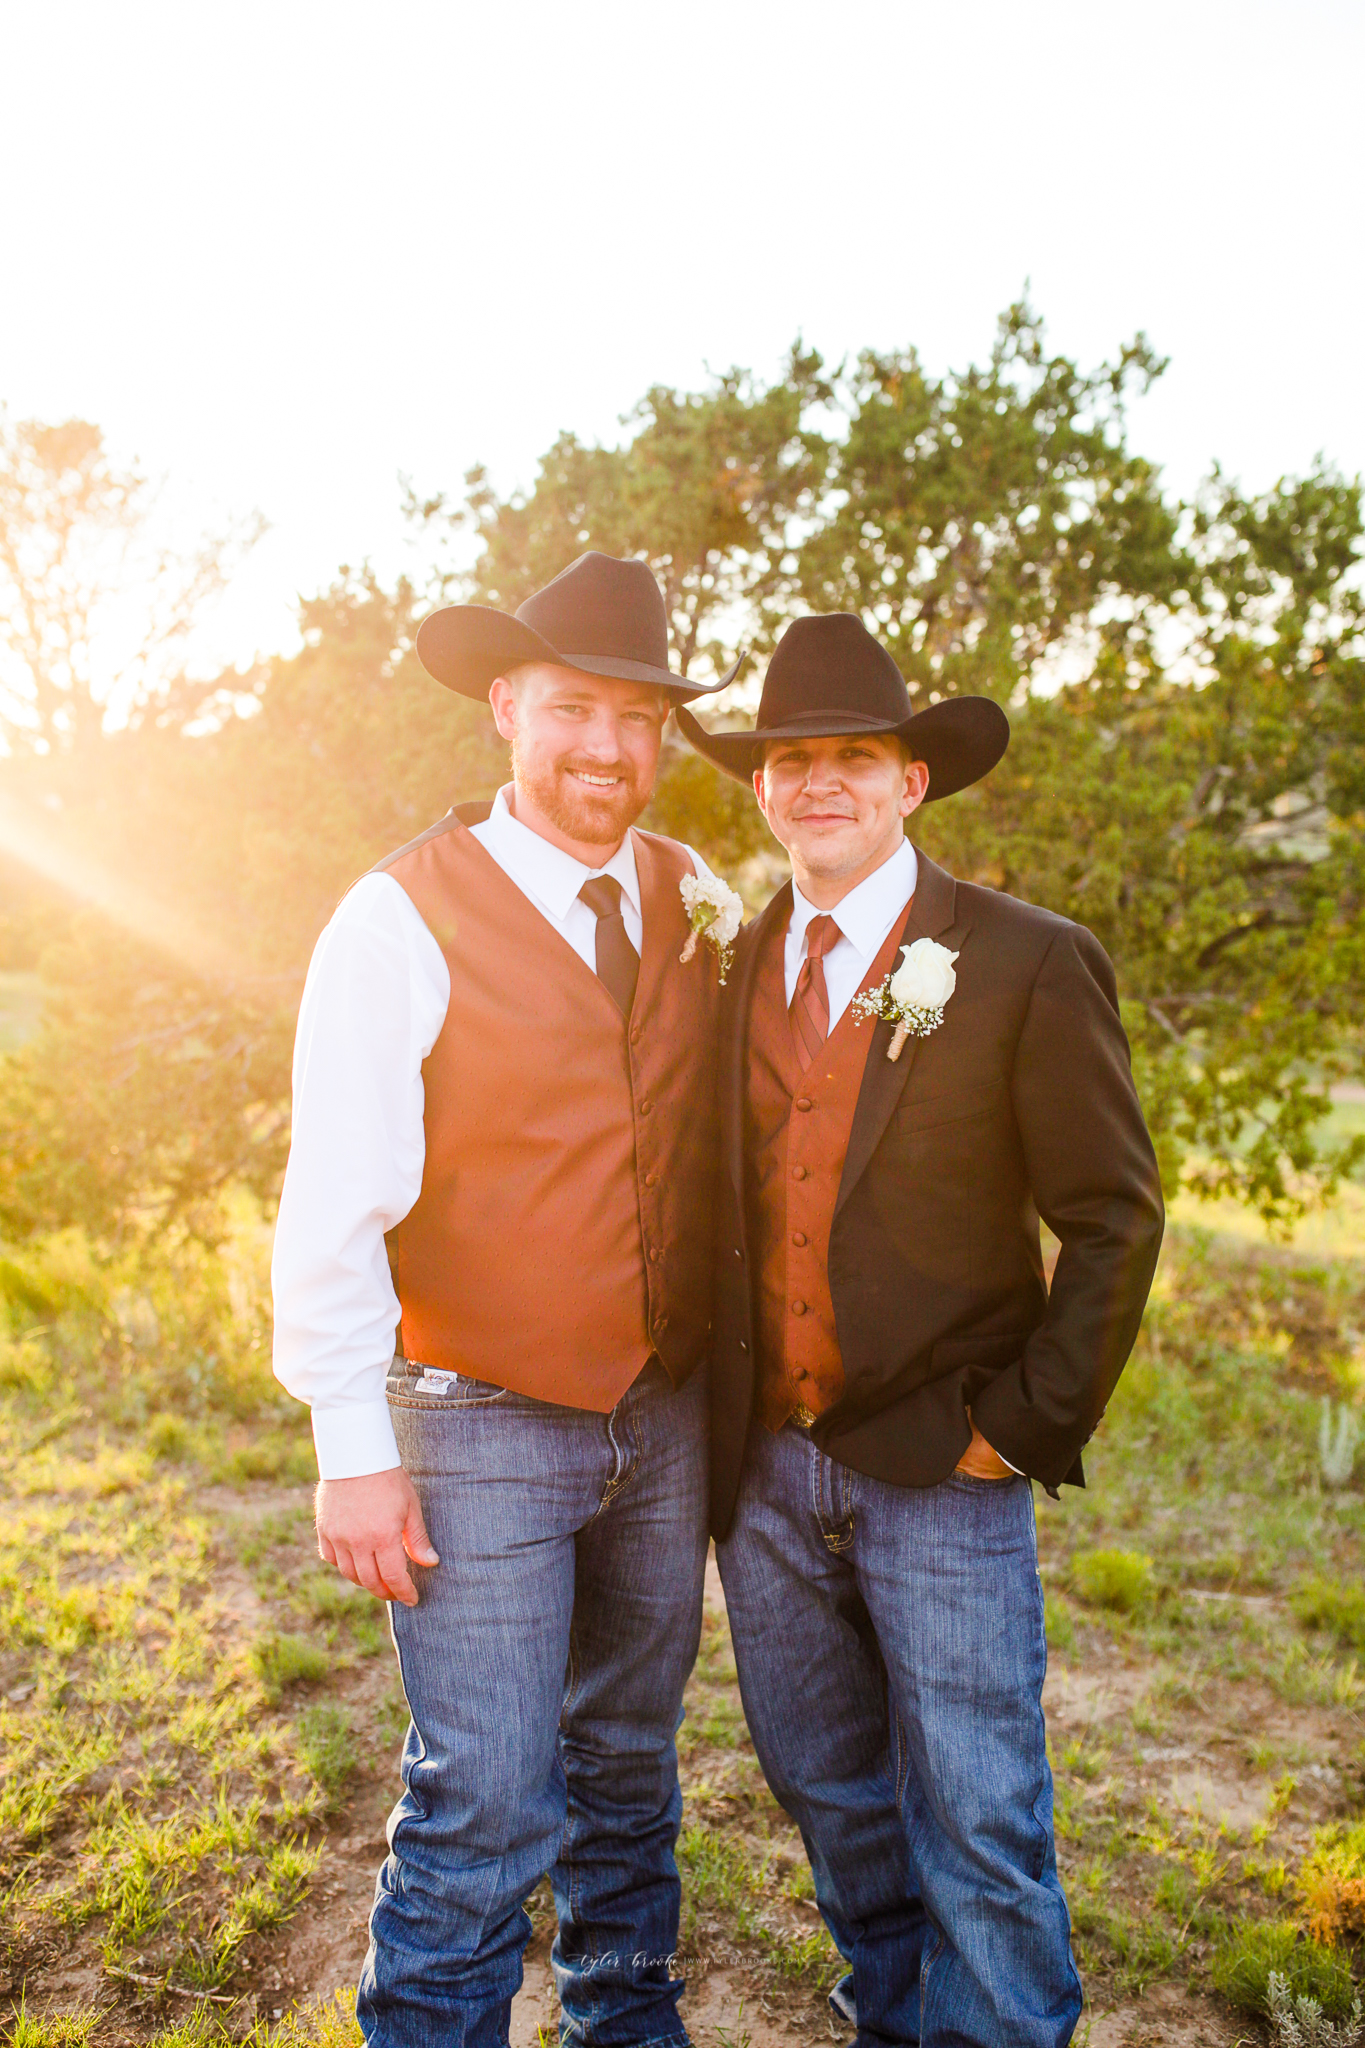 Edgewood New Mexico_Country Wedding Photographer_www.tylerbrooke.com_Kate Kauffman (28 of 35)